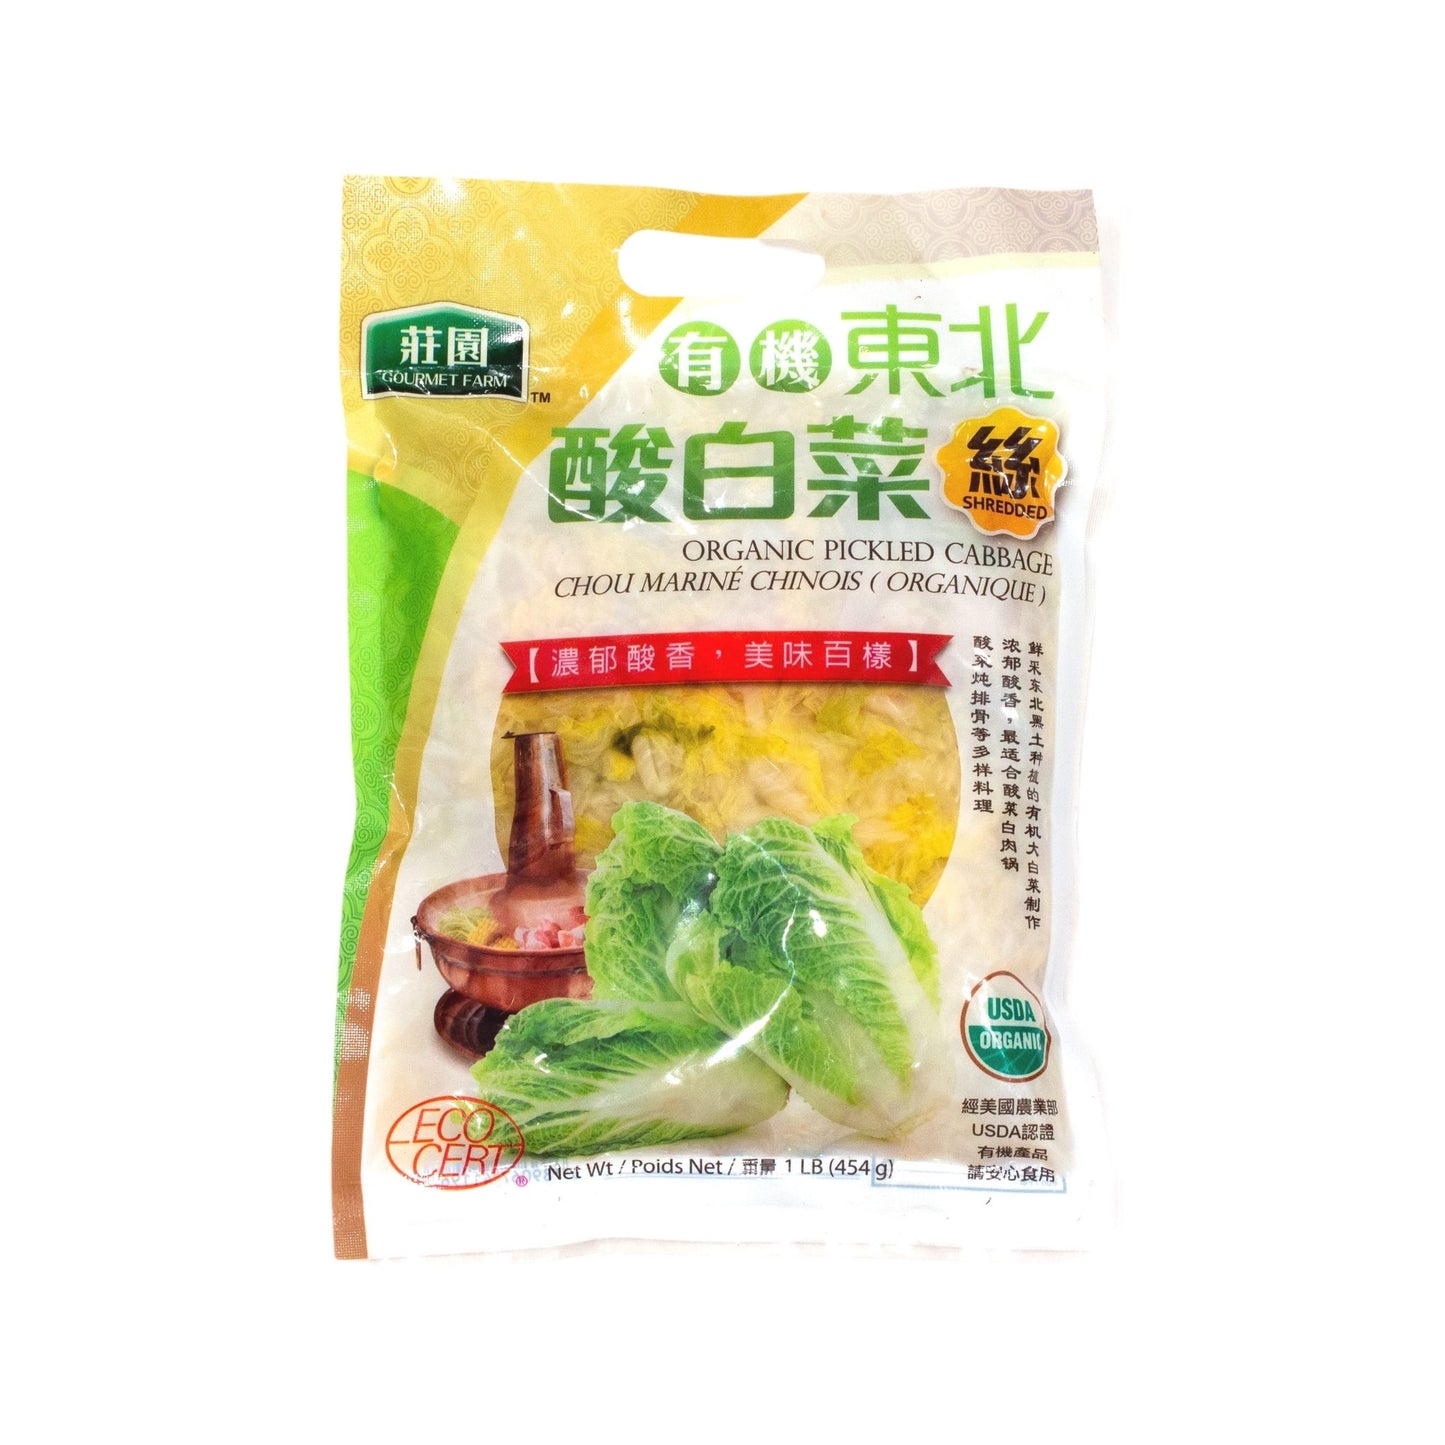 Organic Pickled Cabbage Shredded 东北酸白菜絲 (1 LB)